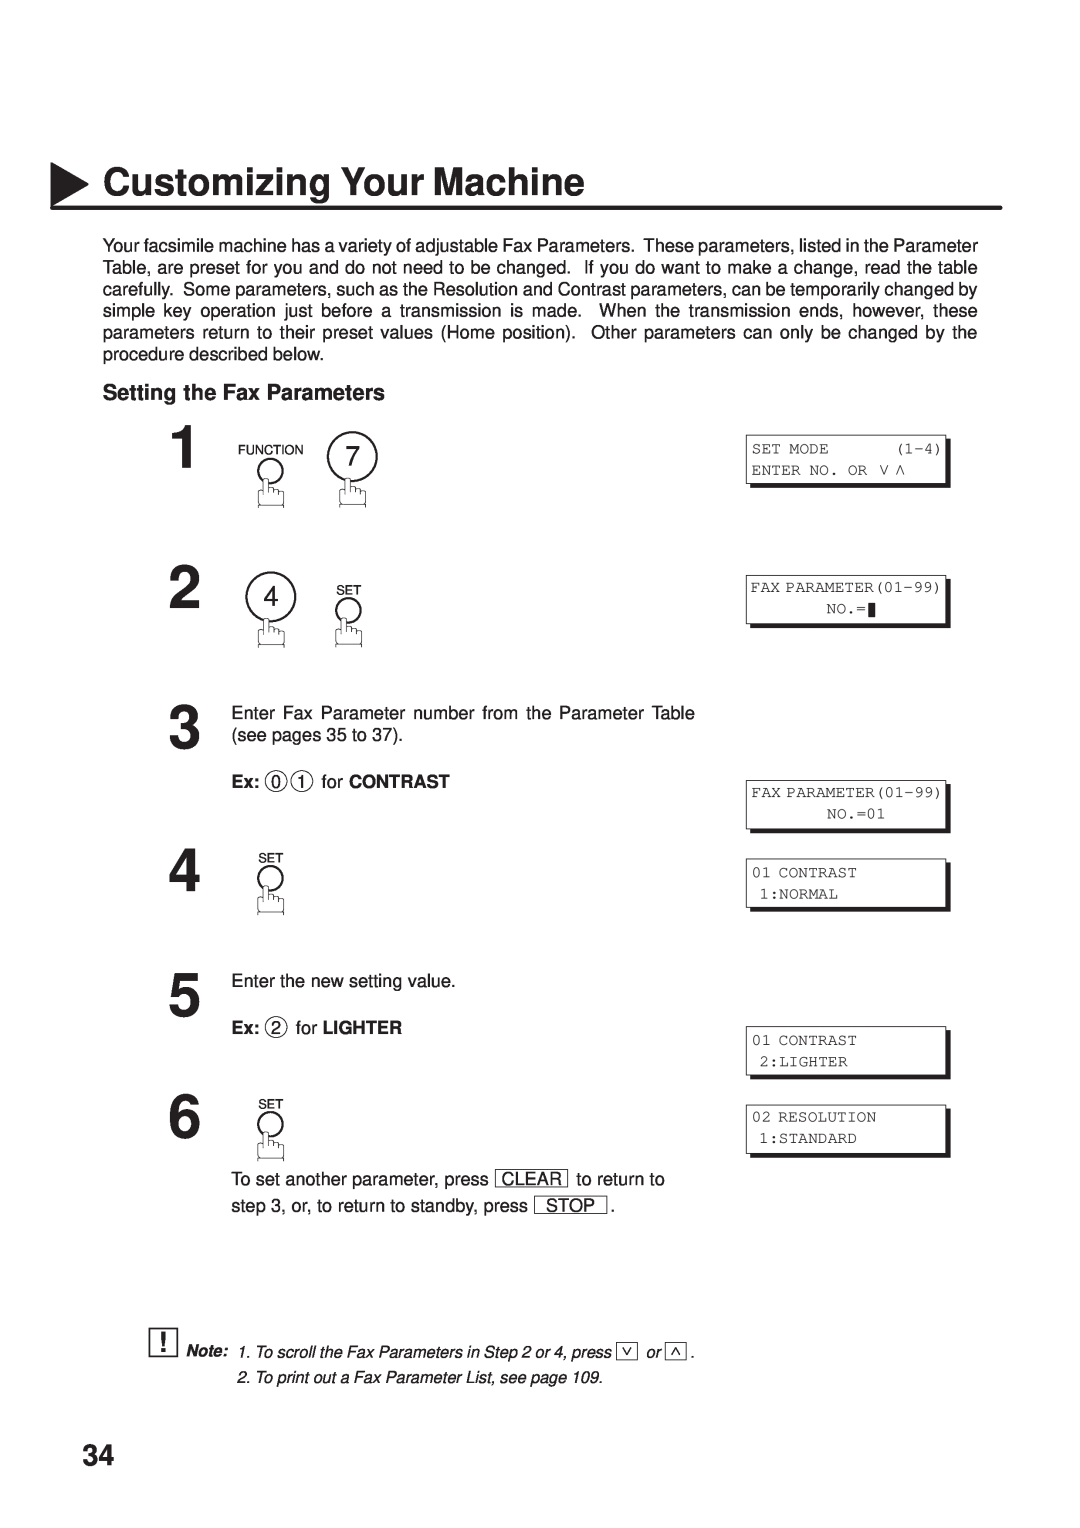 Panasonic UF-333 manual Customizing Your Machine, Setting the Fax Parameters 